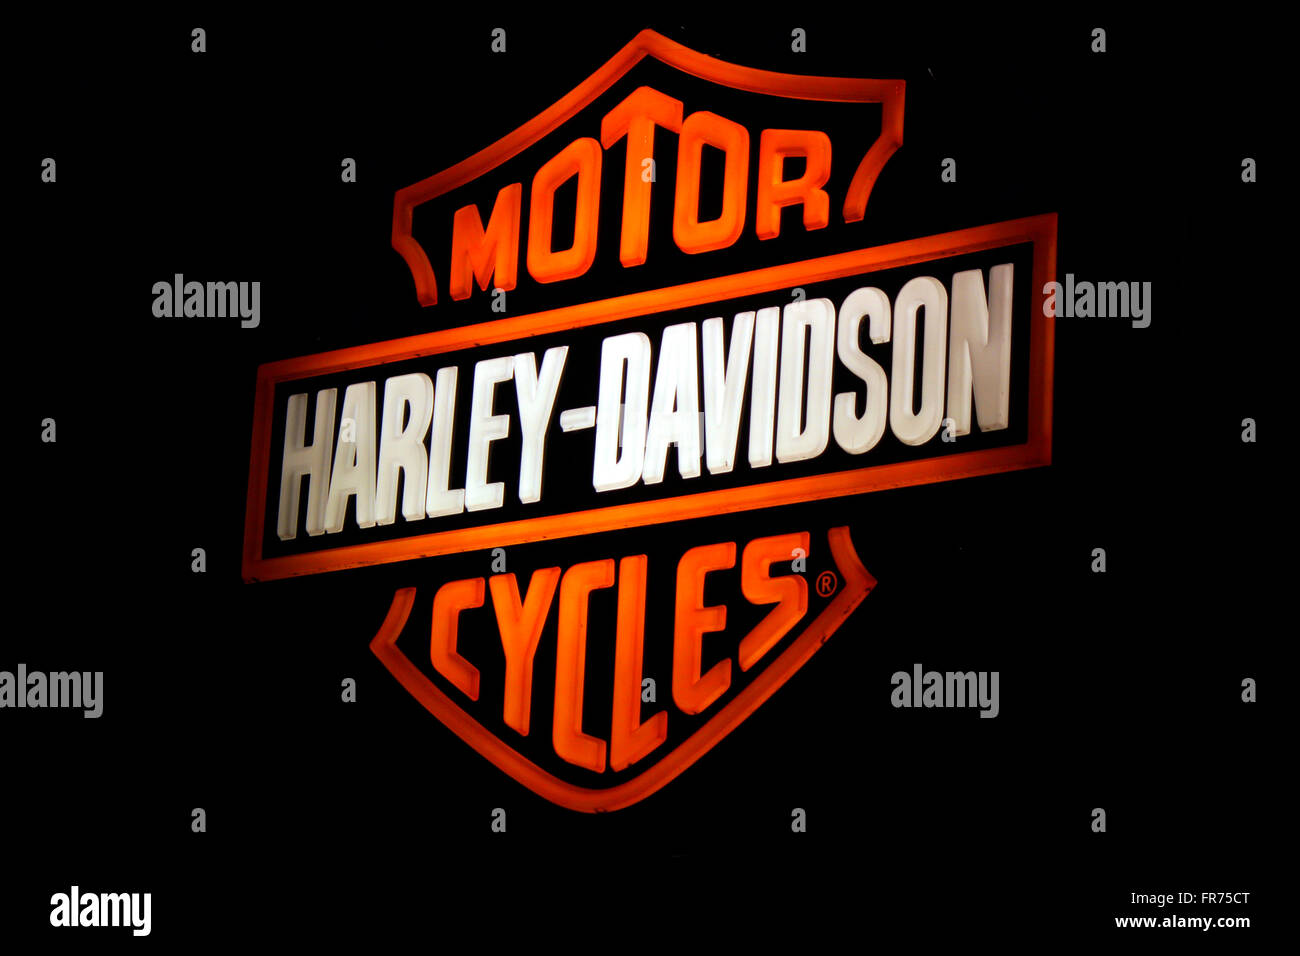 Markenname: "Harley Davidson", Berlin. Stockfoto